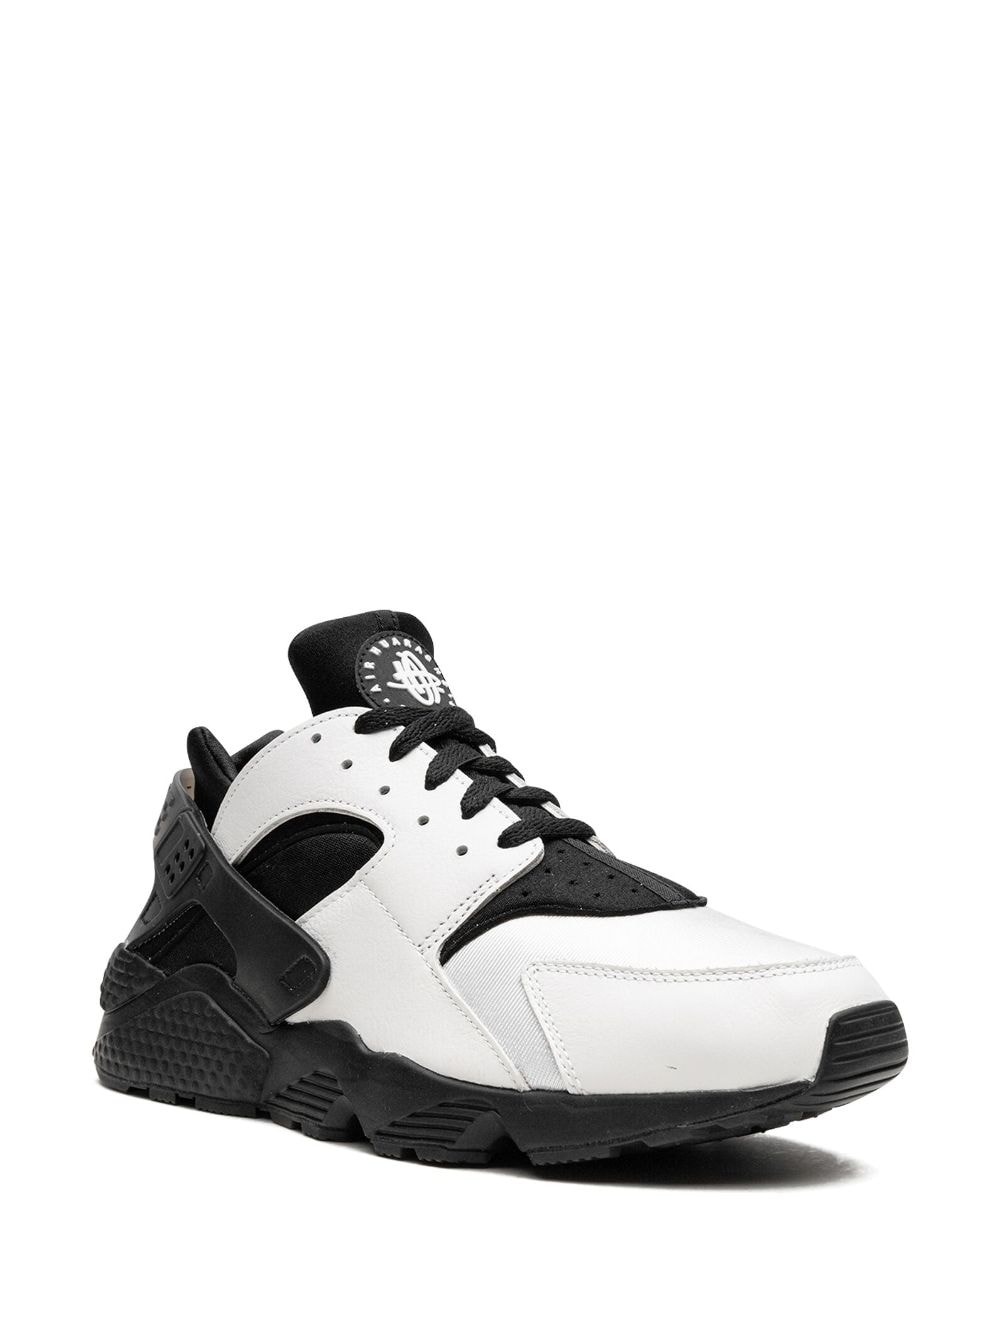 Air Huarache "White/Black" sneakers - 2